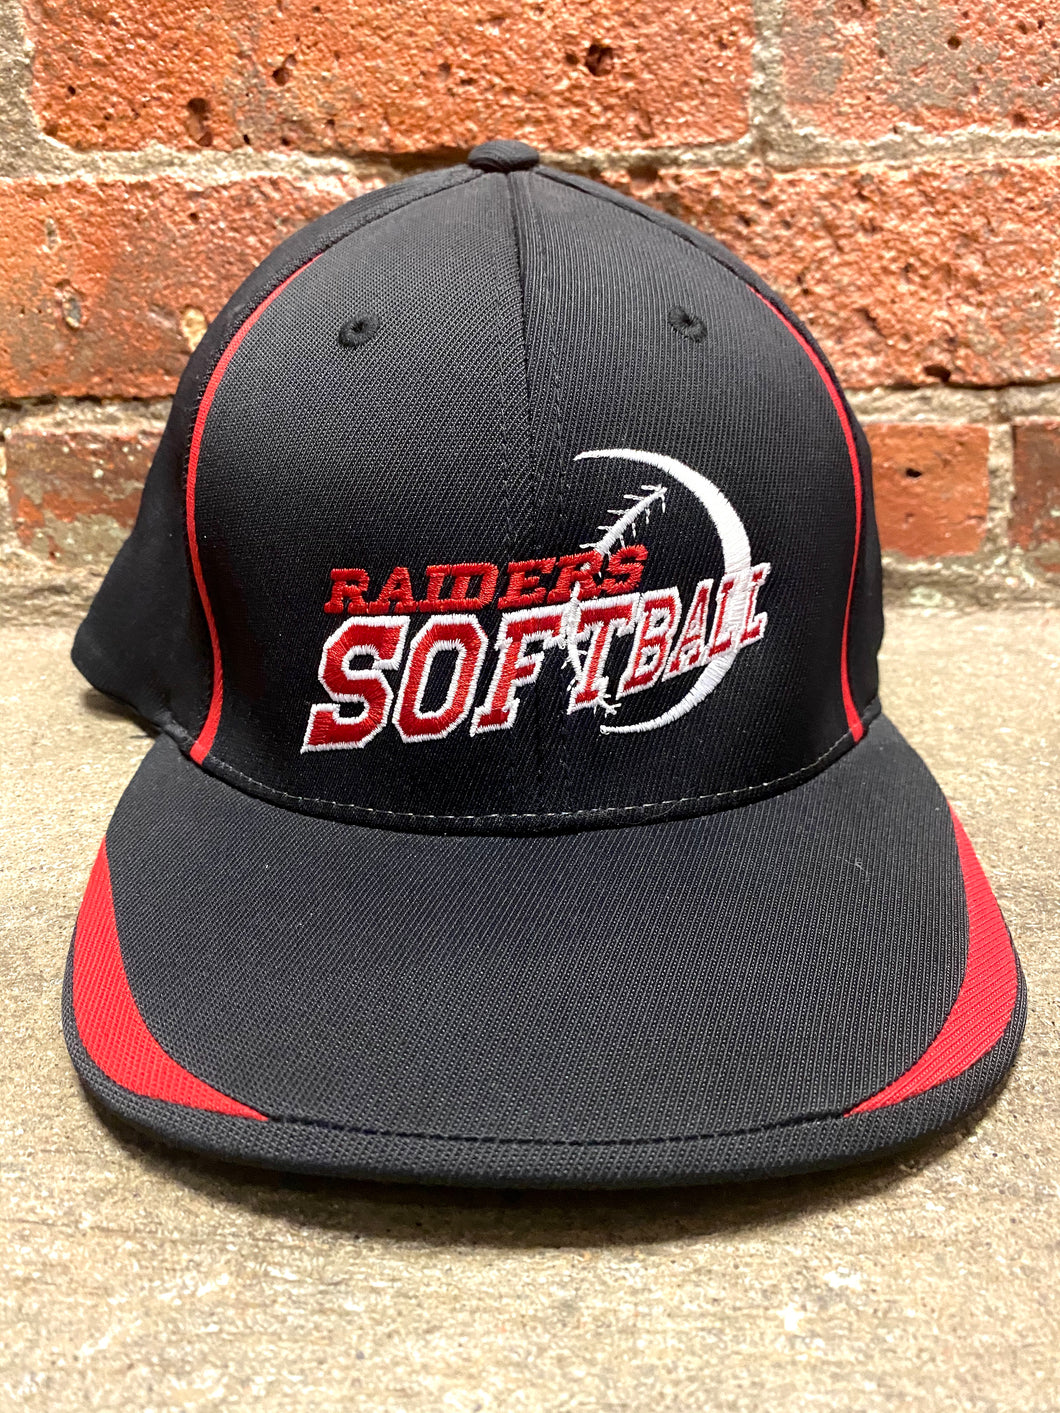 CLEARANCE- Raiders Softball Flexfit Hat